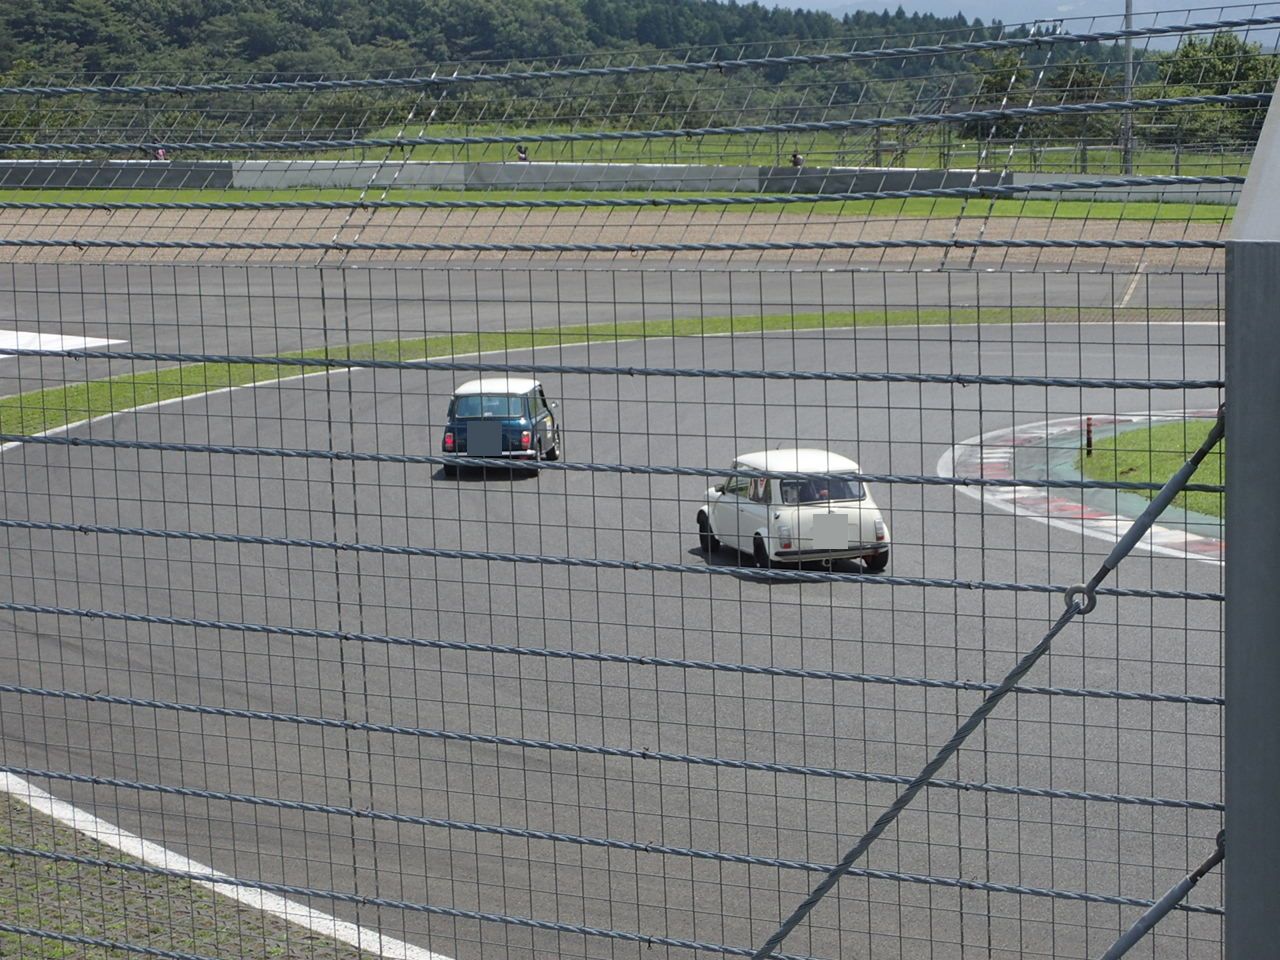 Mini-Fest-2019-PHOTO-12-Classic-Mini-at-First-Corner-at-Fuji-Speedway-in-Japan